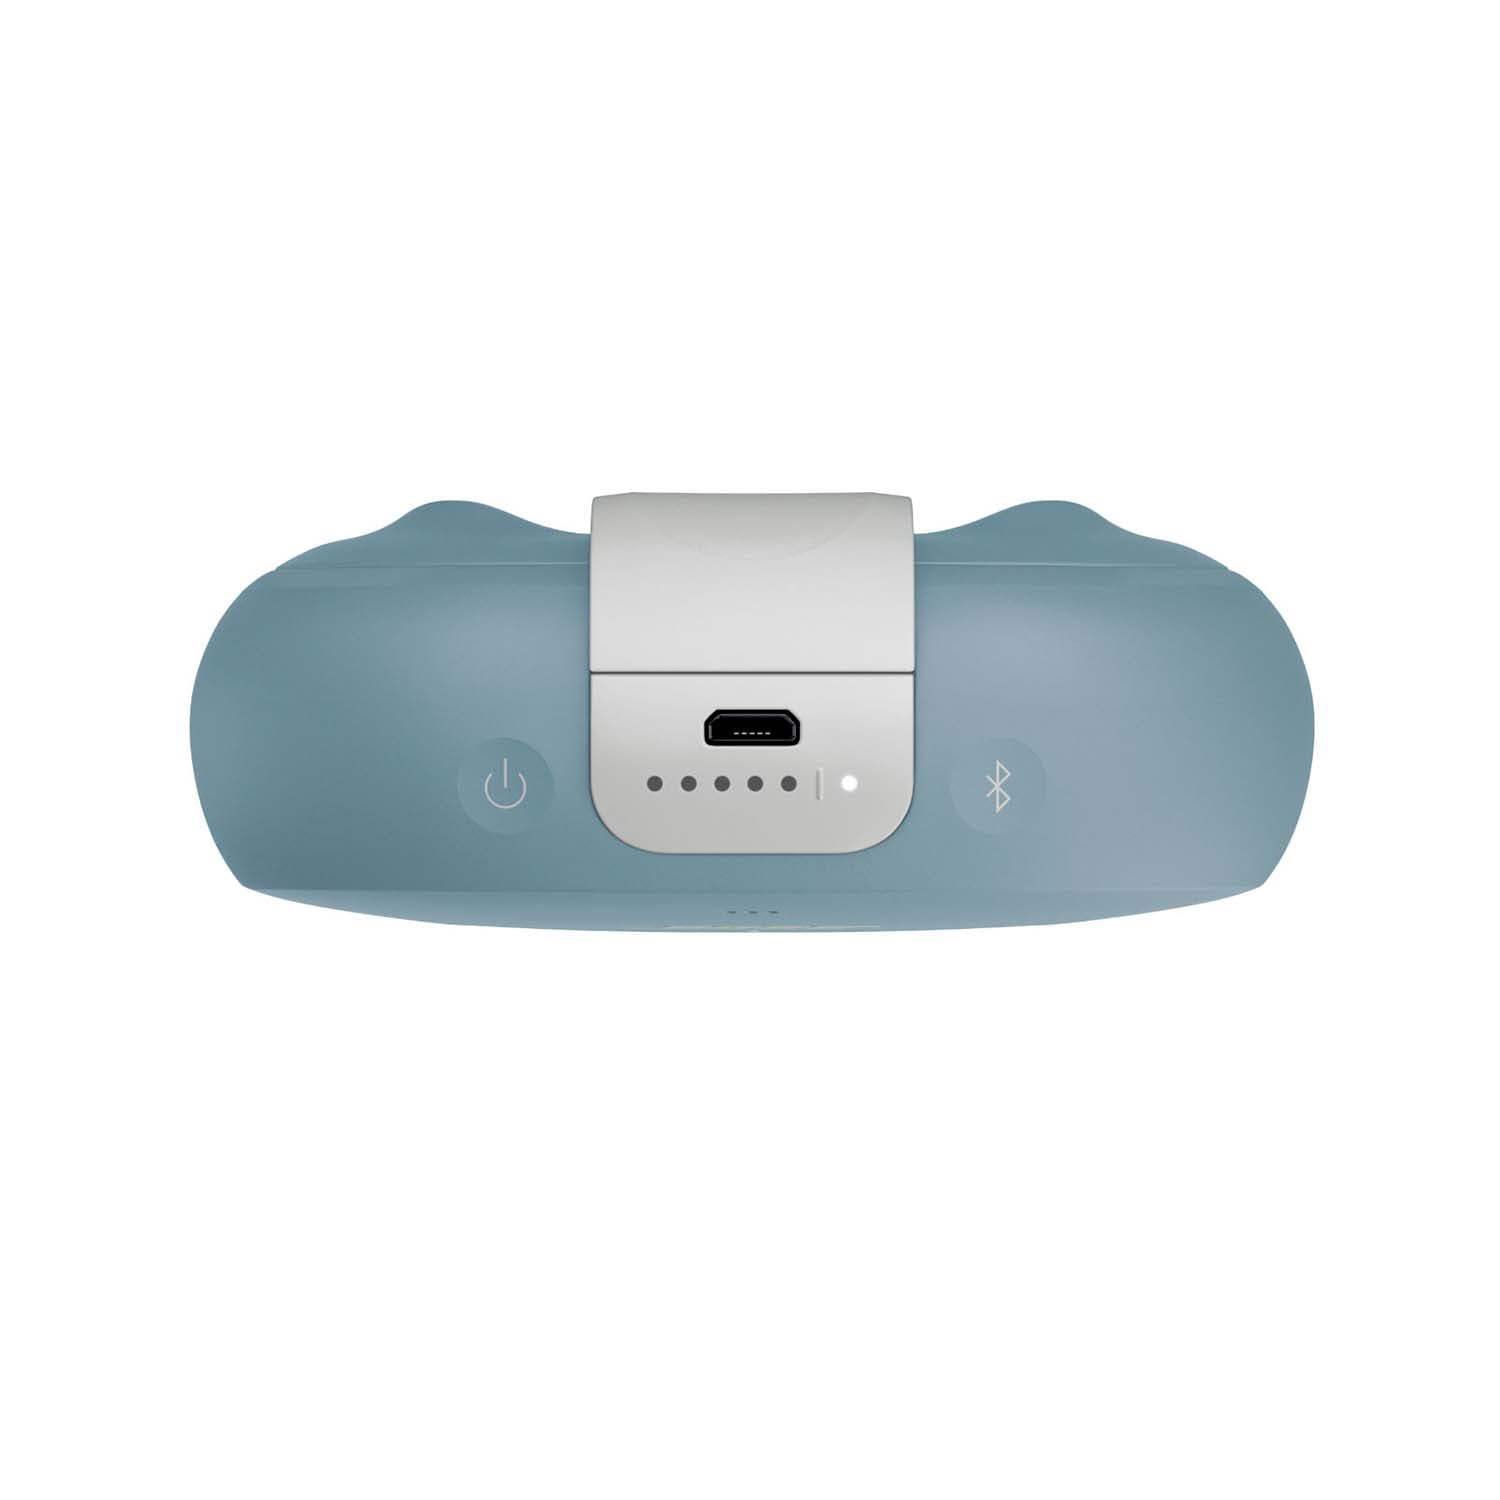  BSE7833420400  Bose - Enceinte portable Bluetooth SoundLink  Micro, Blanc Nuage